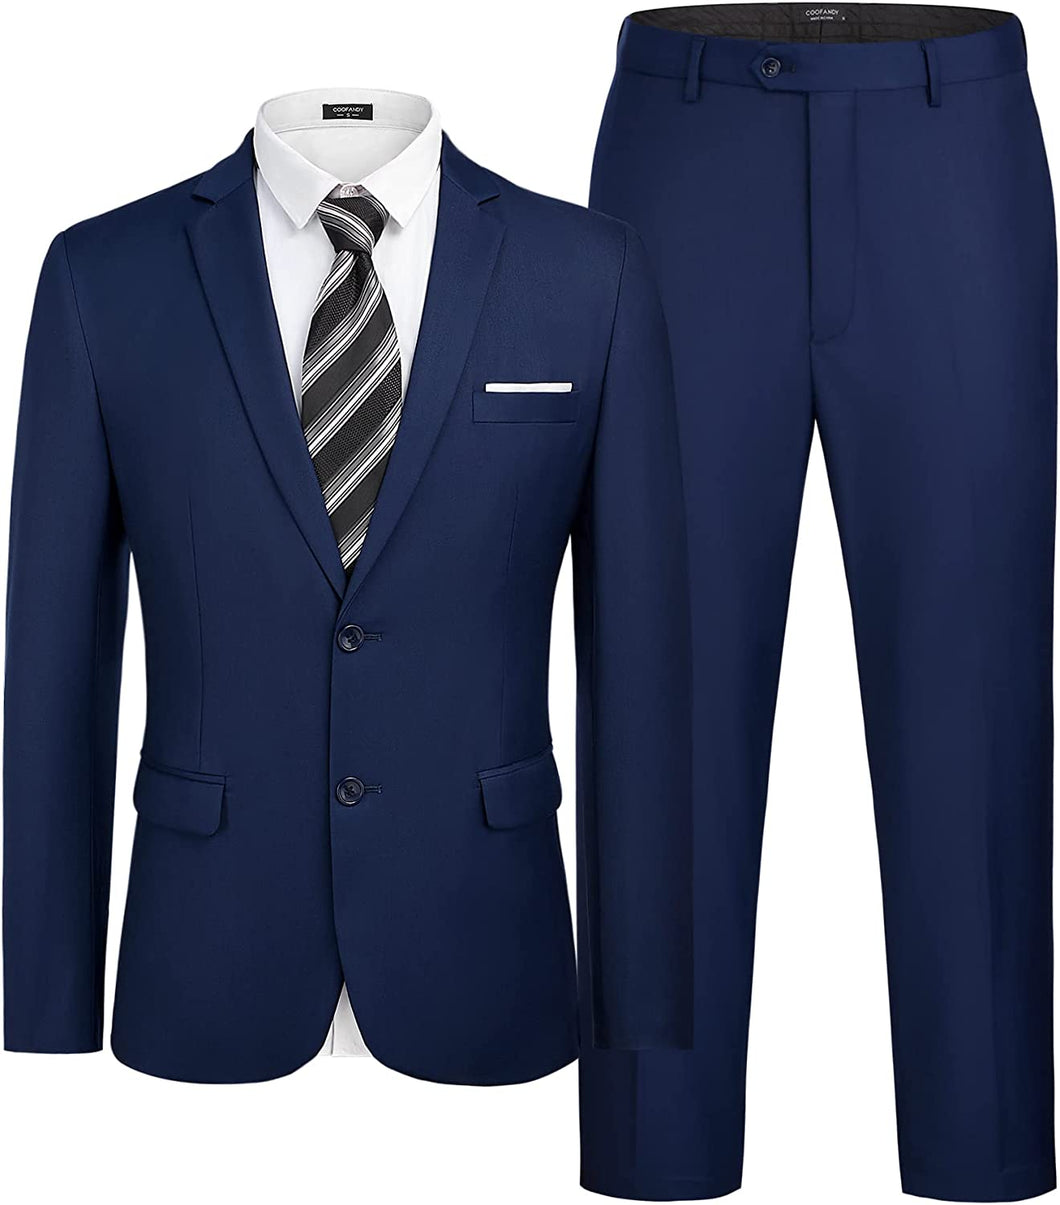 Men's Suit for Groomsmen Wedding 2 Piece Notched Tuxedo Business Classic Groom Suits Grey Black Blue